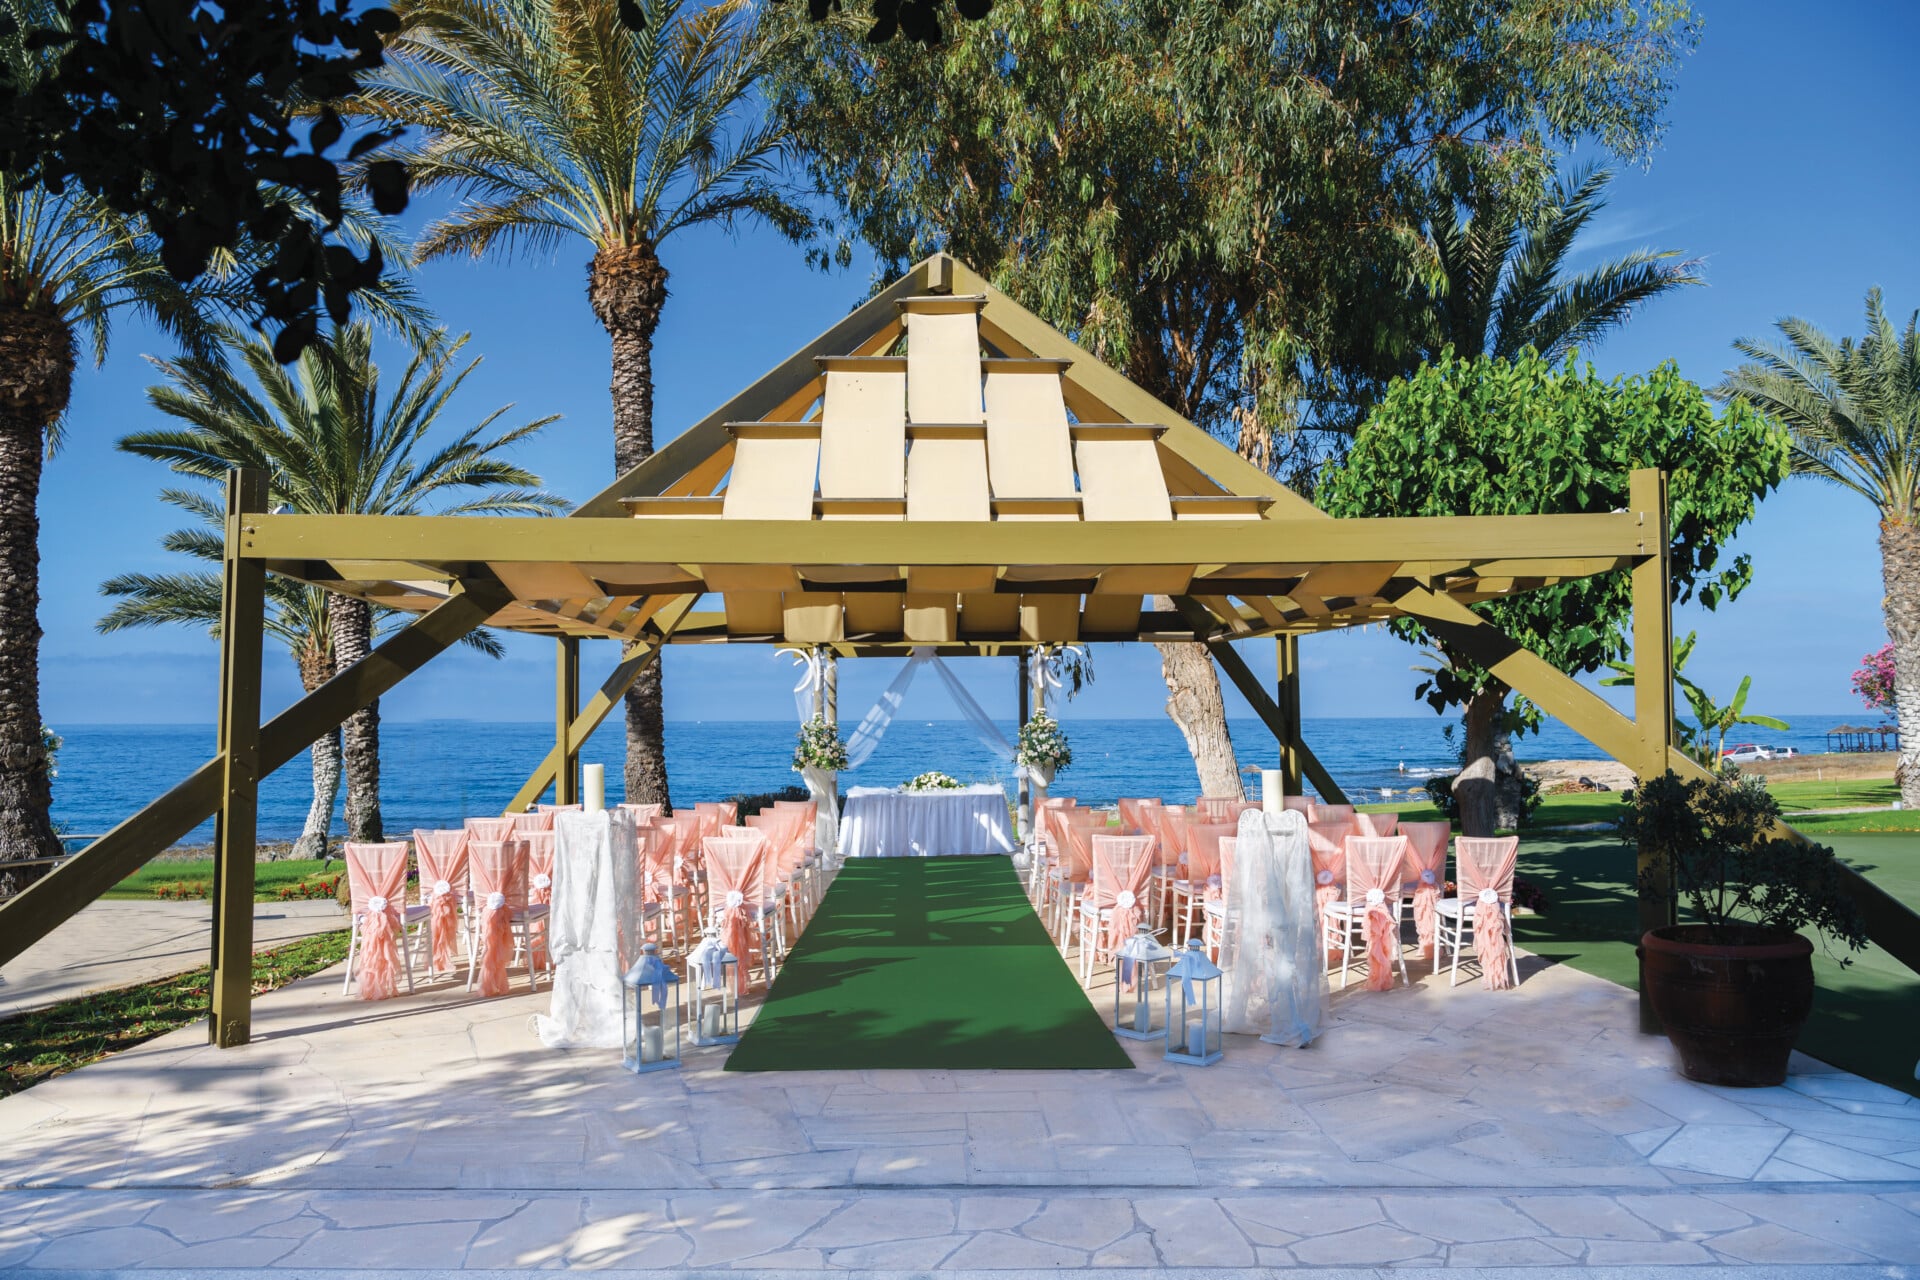 90 ATHENA BEACH HOTEL WEDDING GAZEBO